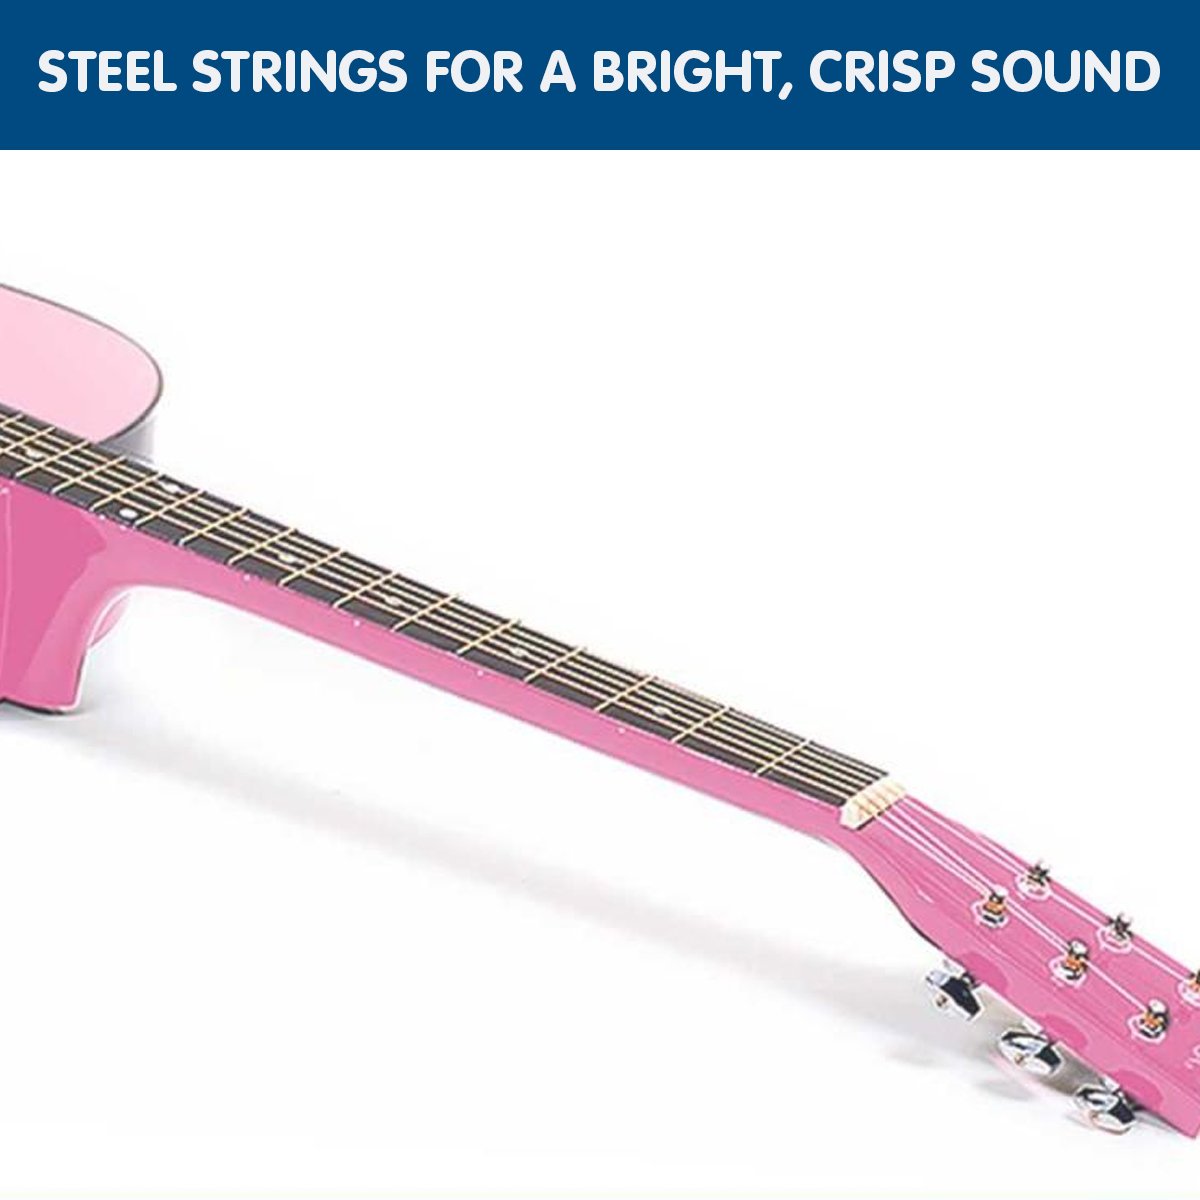 38in Cutaway Acoustic Guitar with guitar bag - Pink